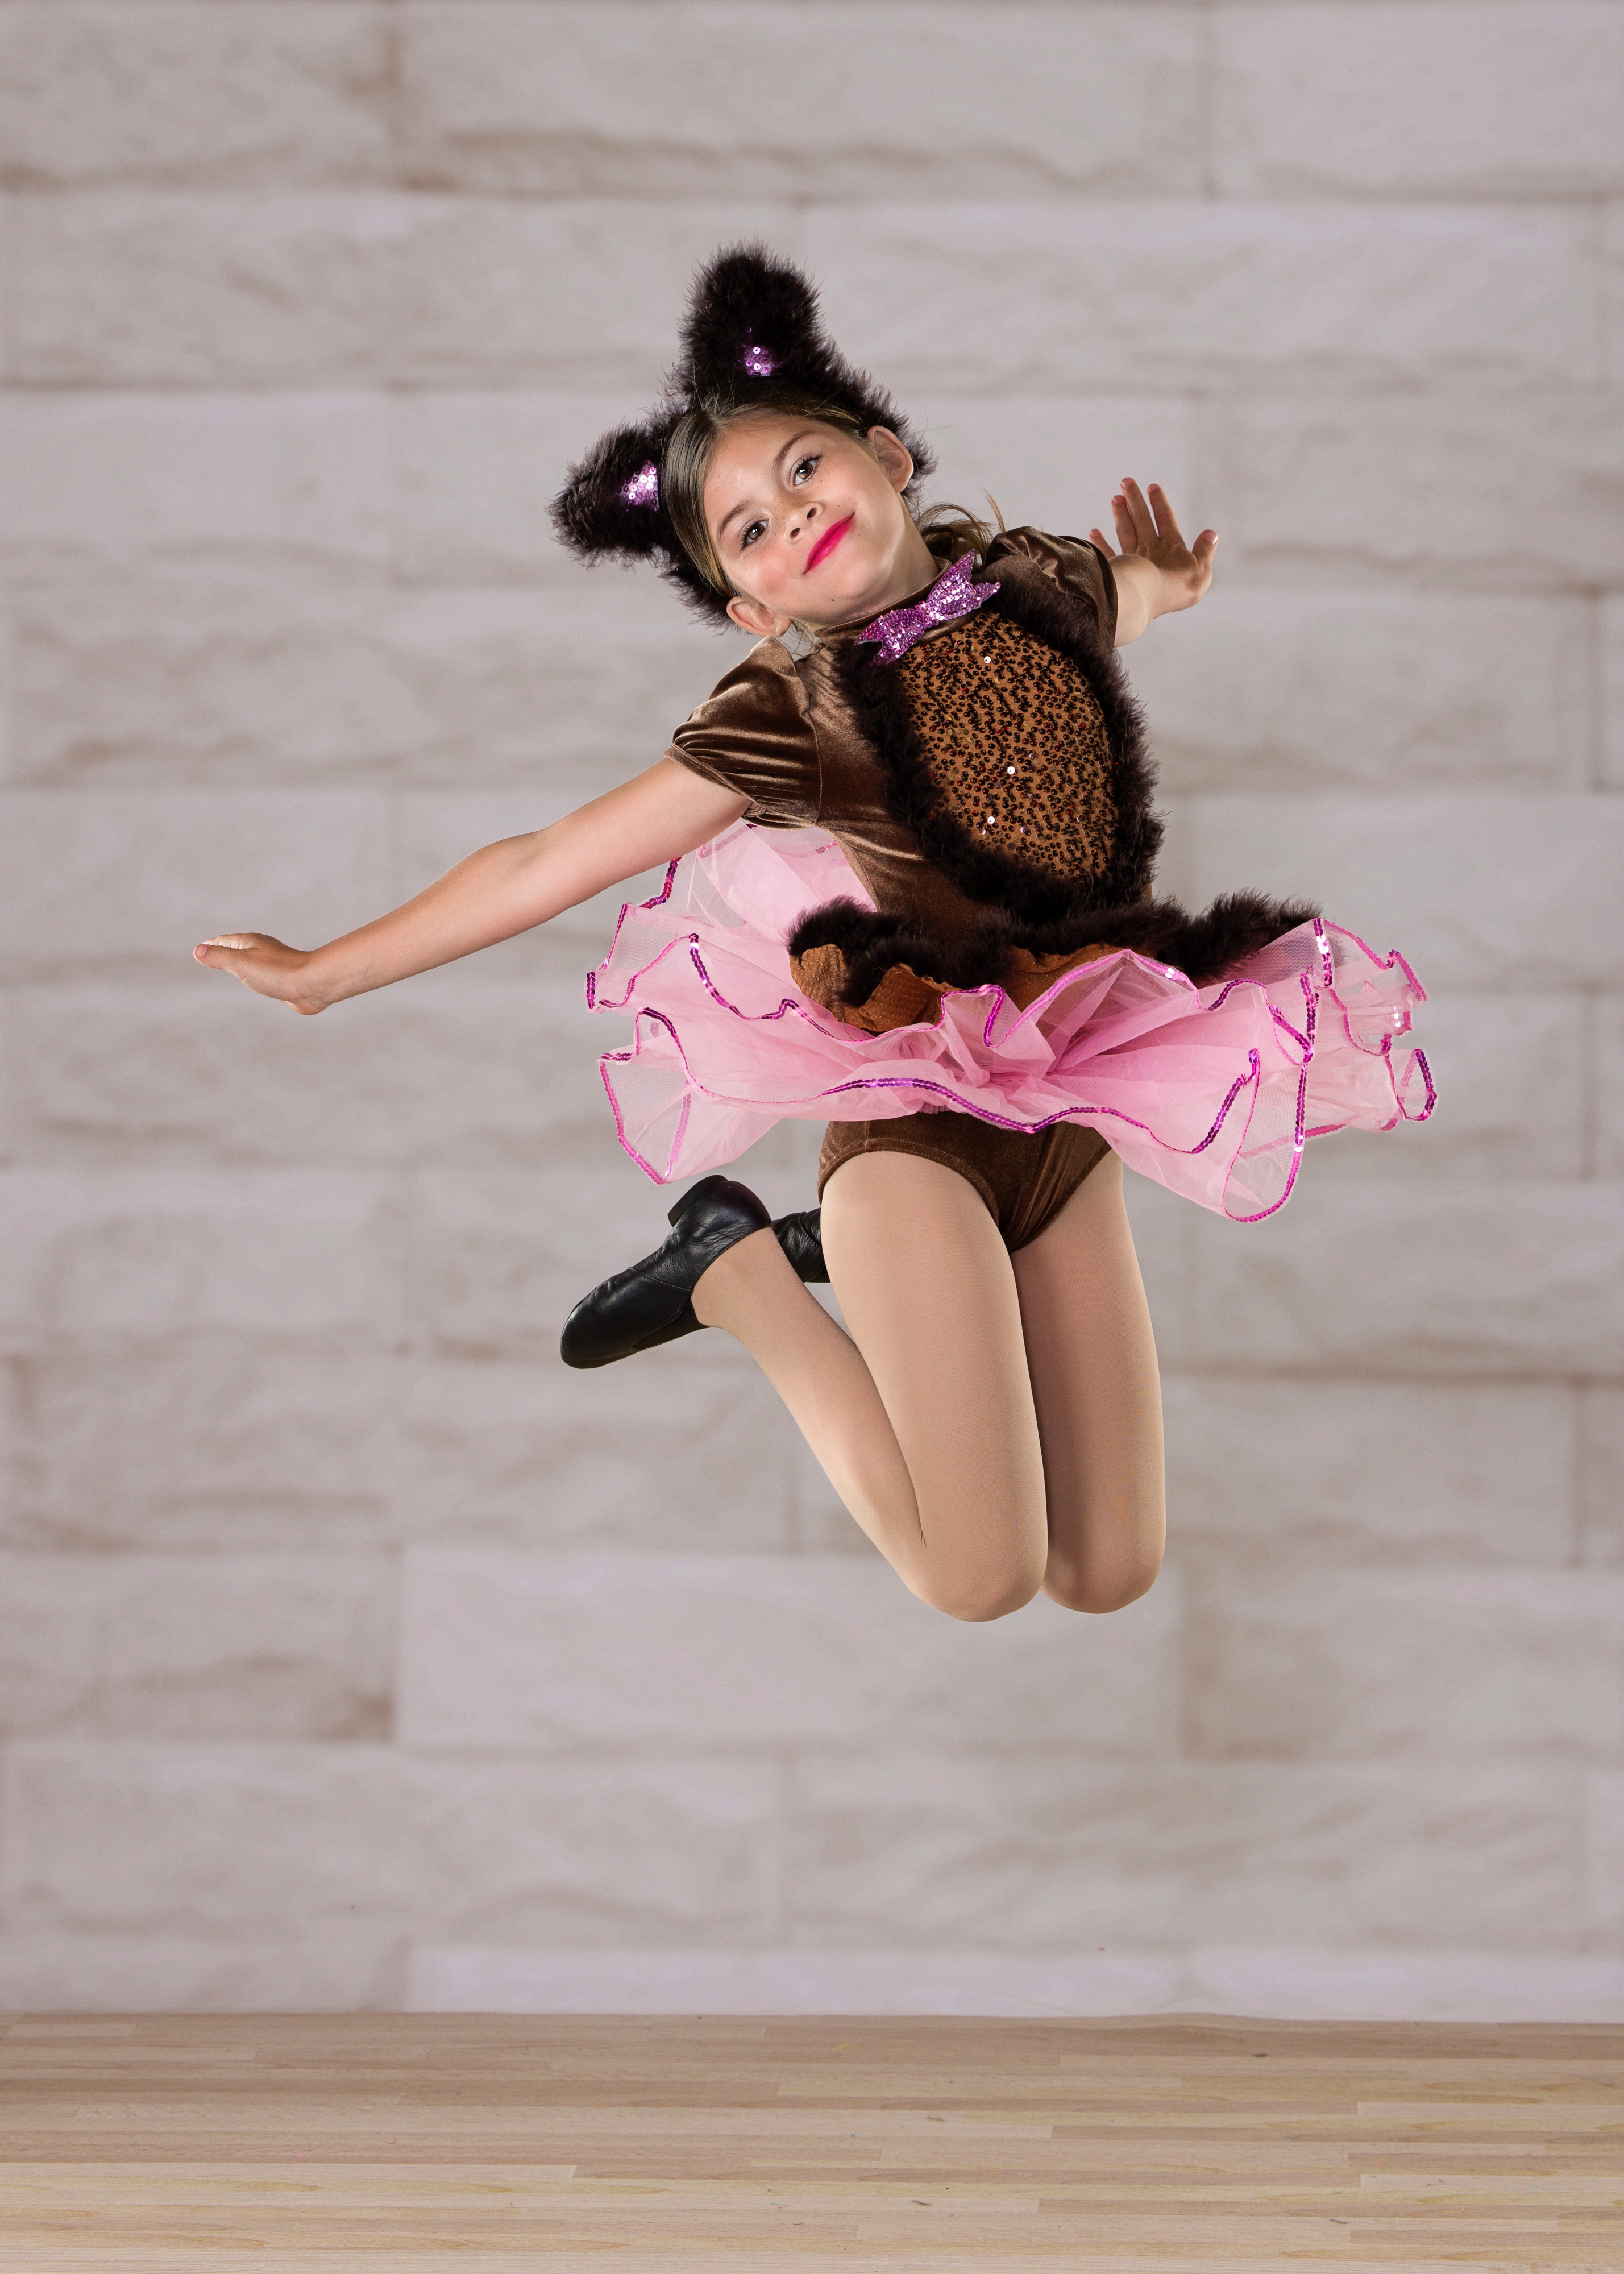 dancer girl jumps in air